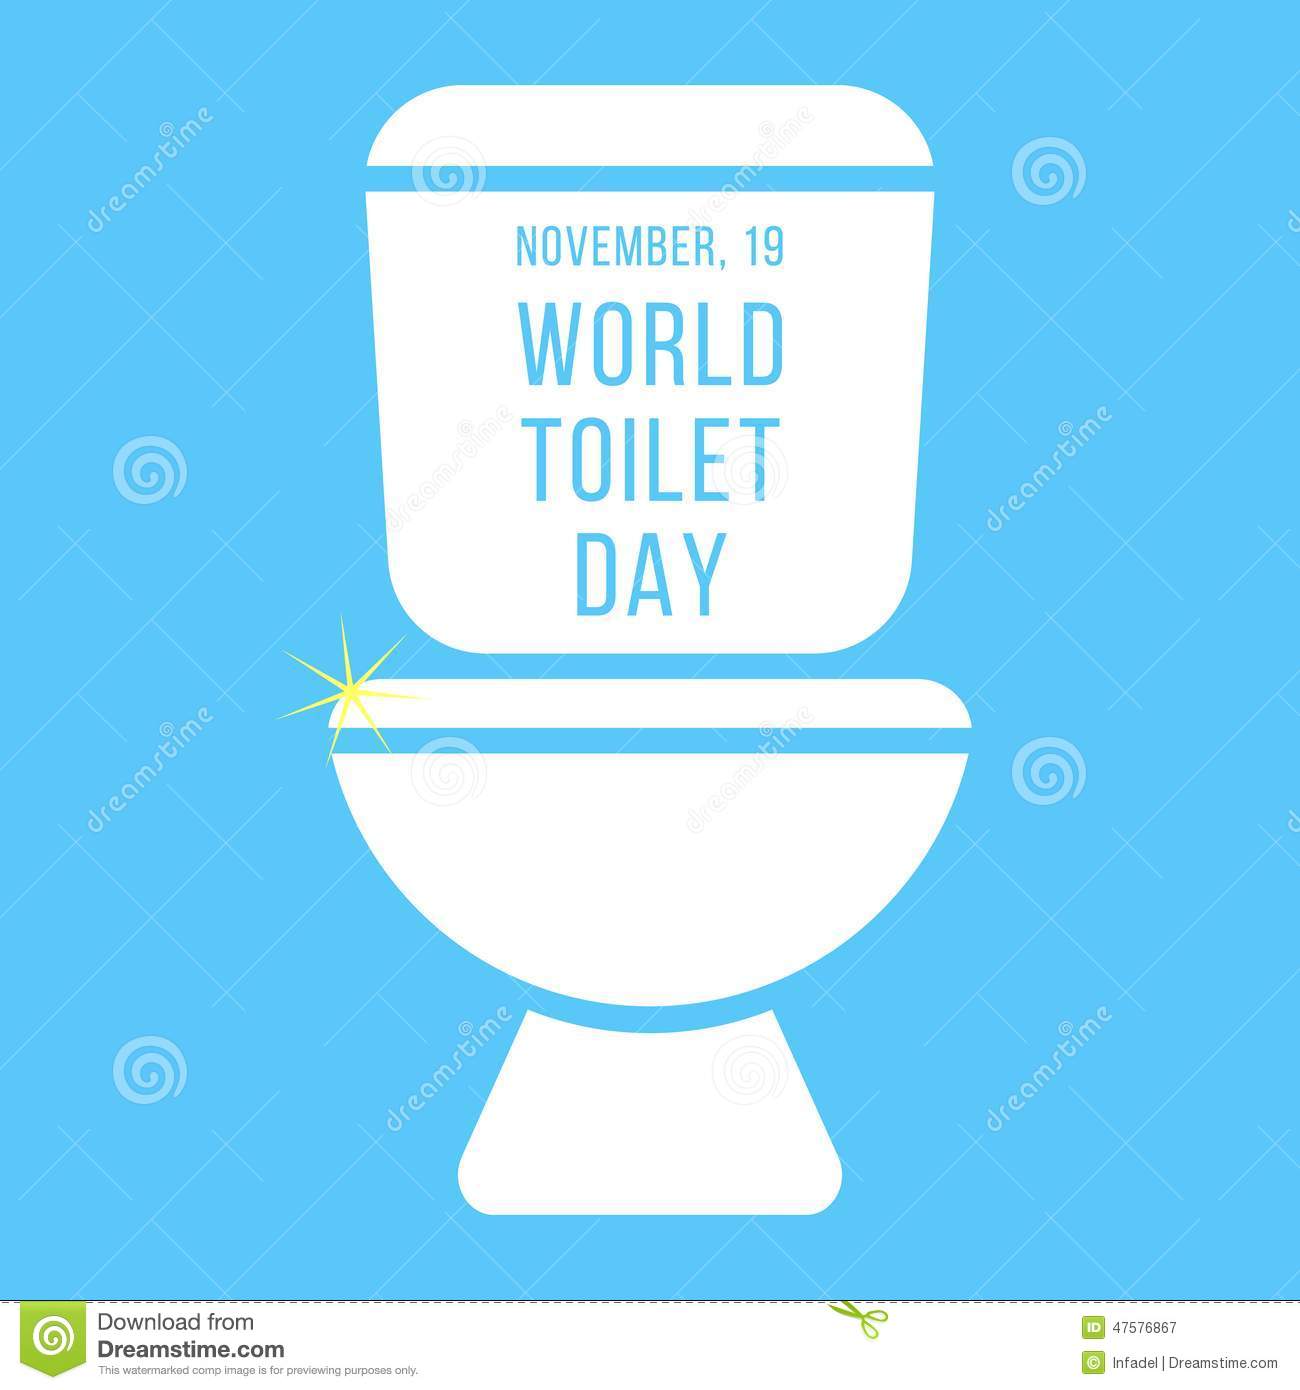 November, 19 World Toilet Day Illustration Picture